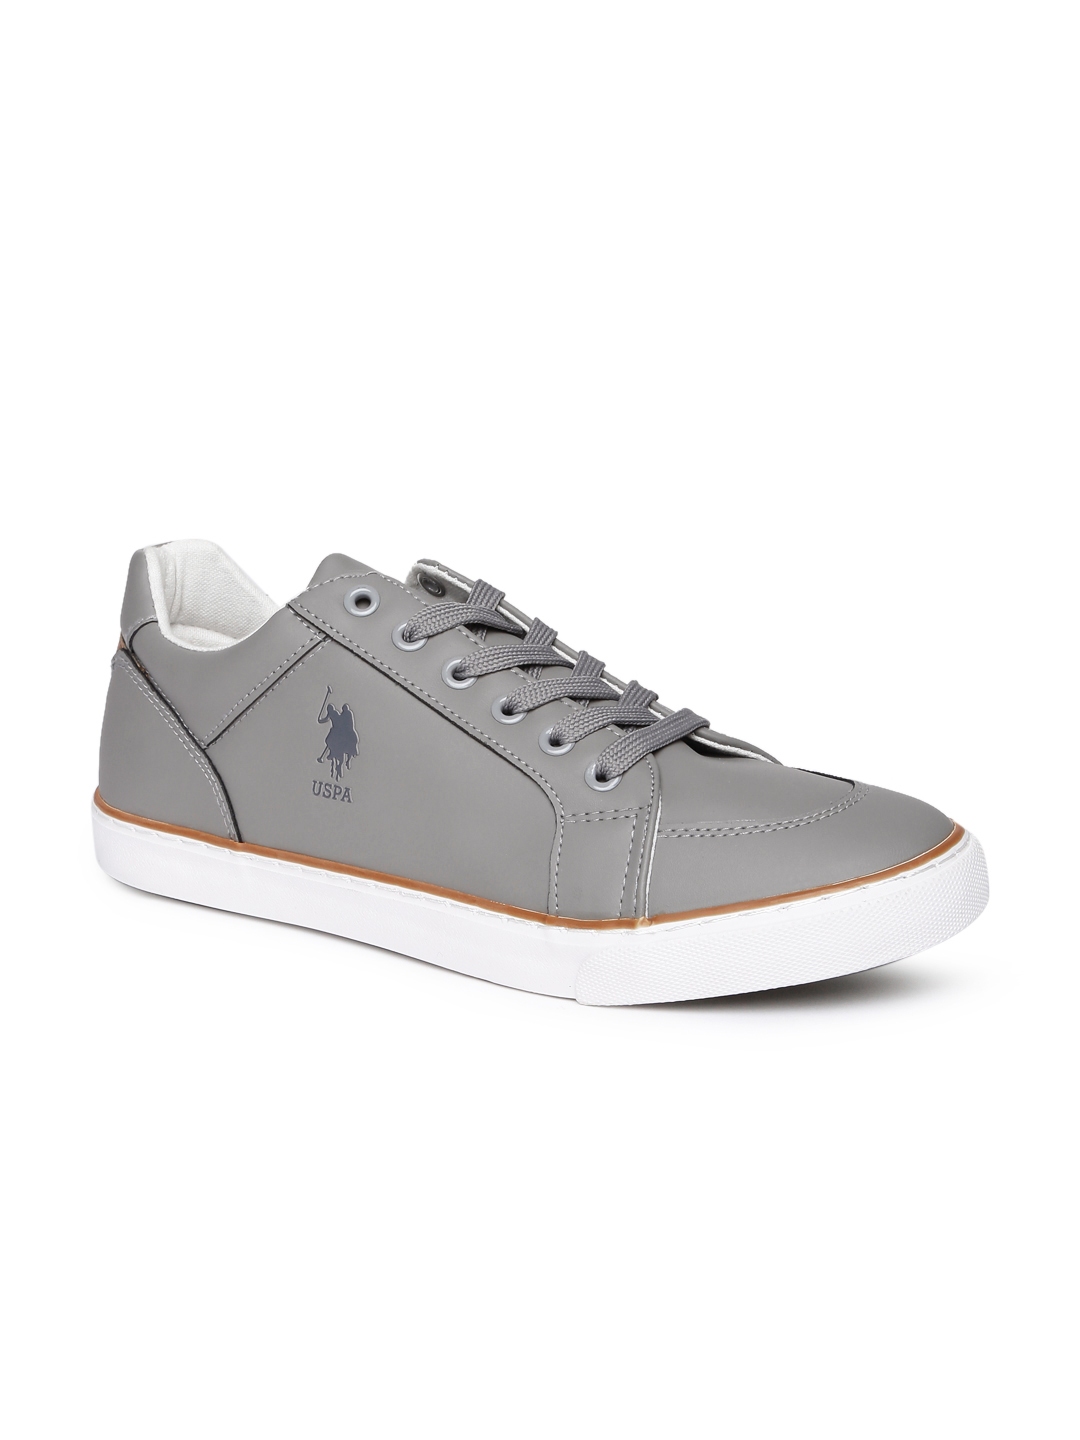 Buy U.S. Polo Assn. Men Grey Sneakers - Casual Shoes for Men 7808873 ...